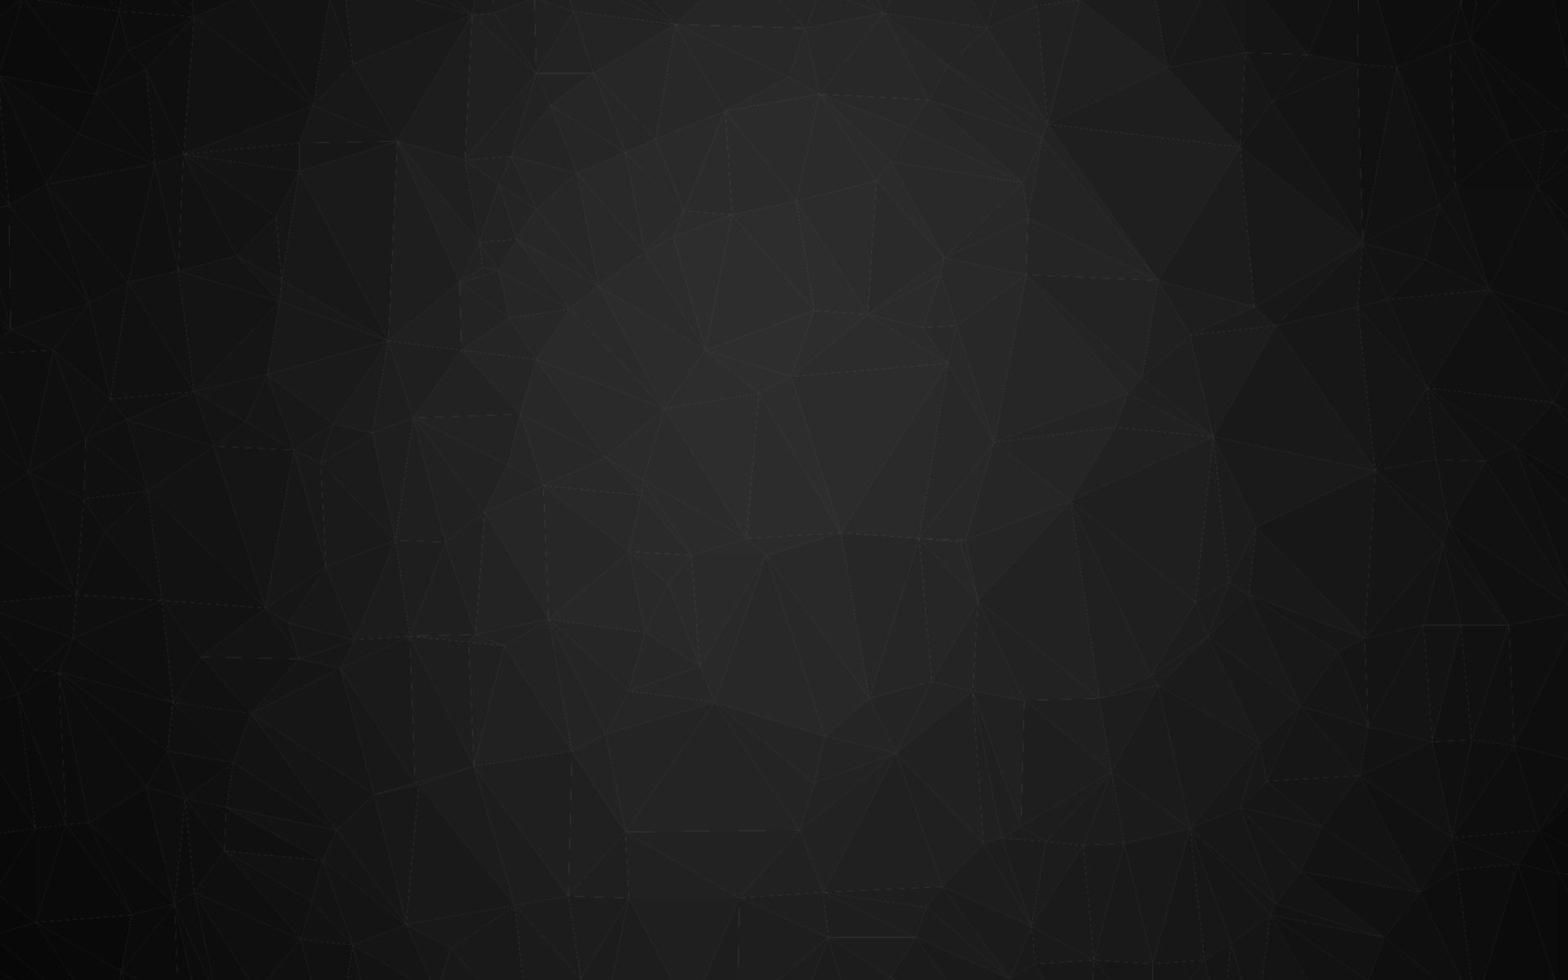 Dark Silver, Gray vector polygonal background.